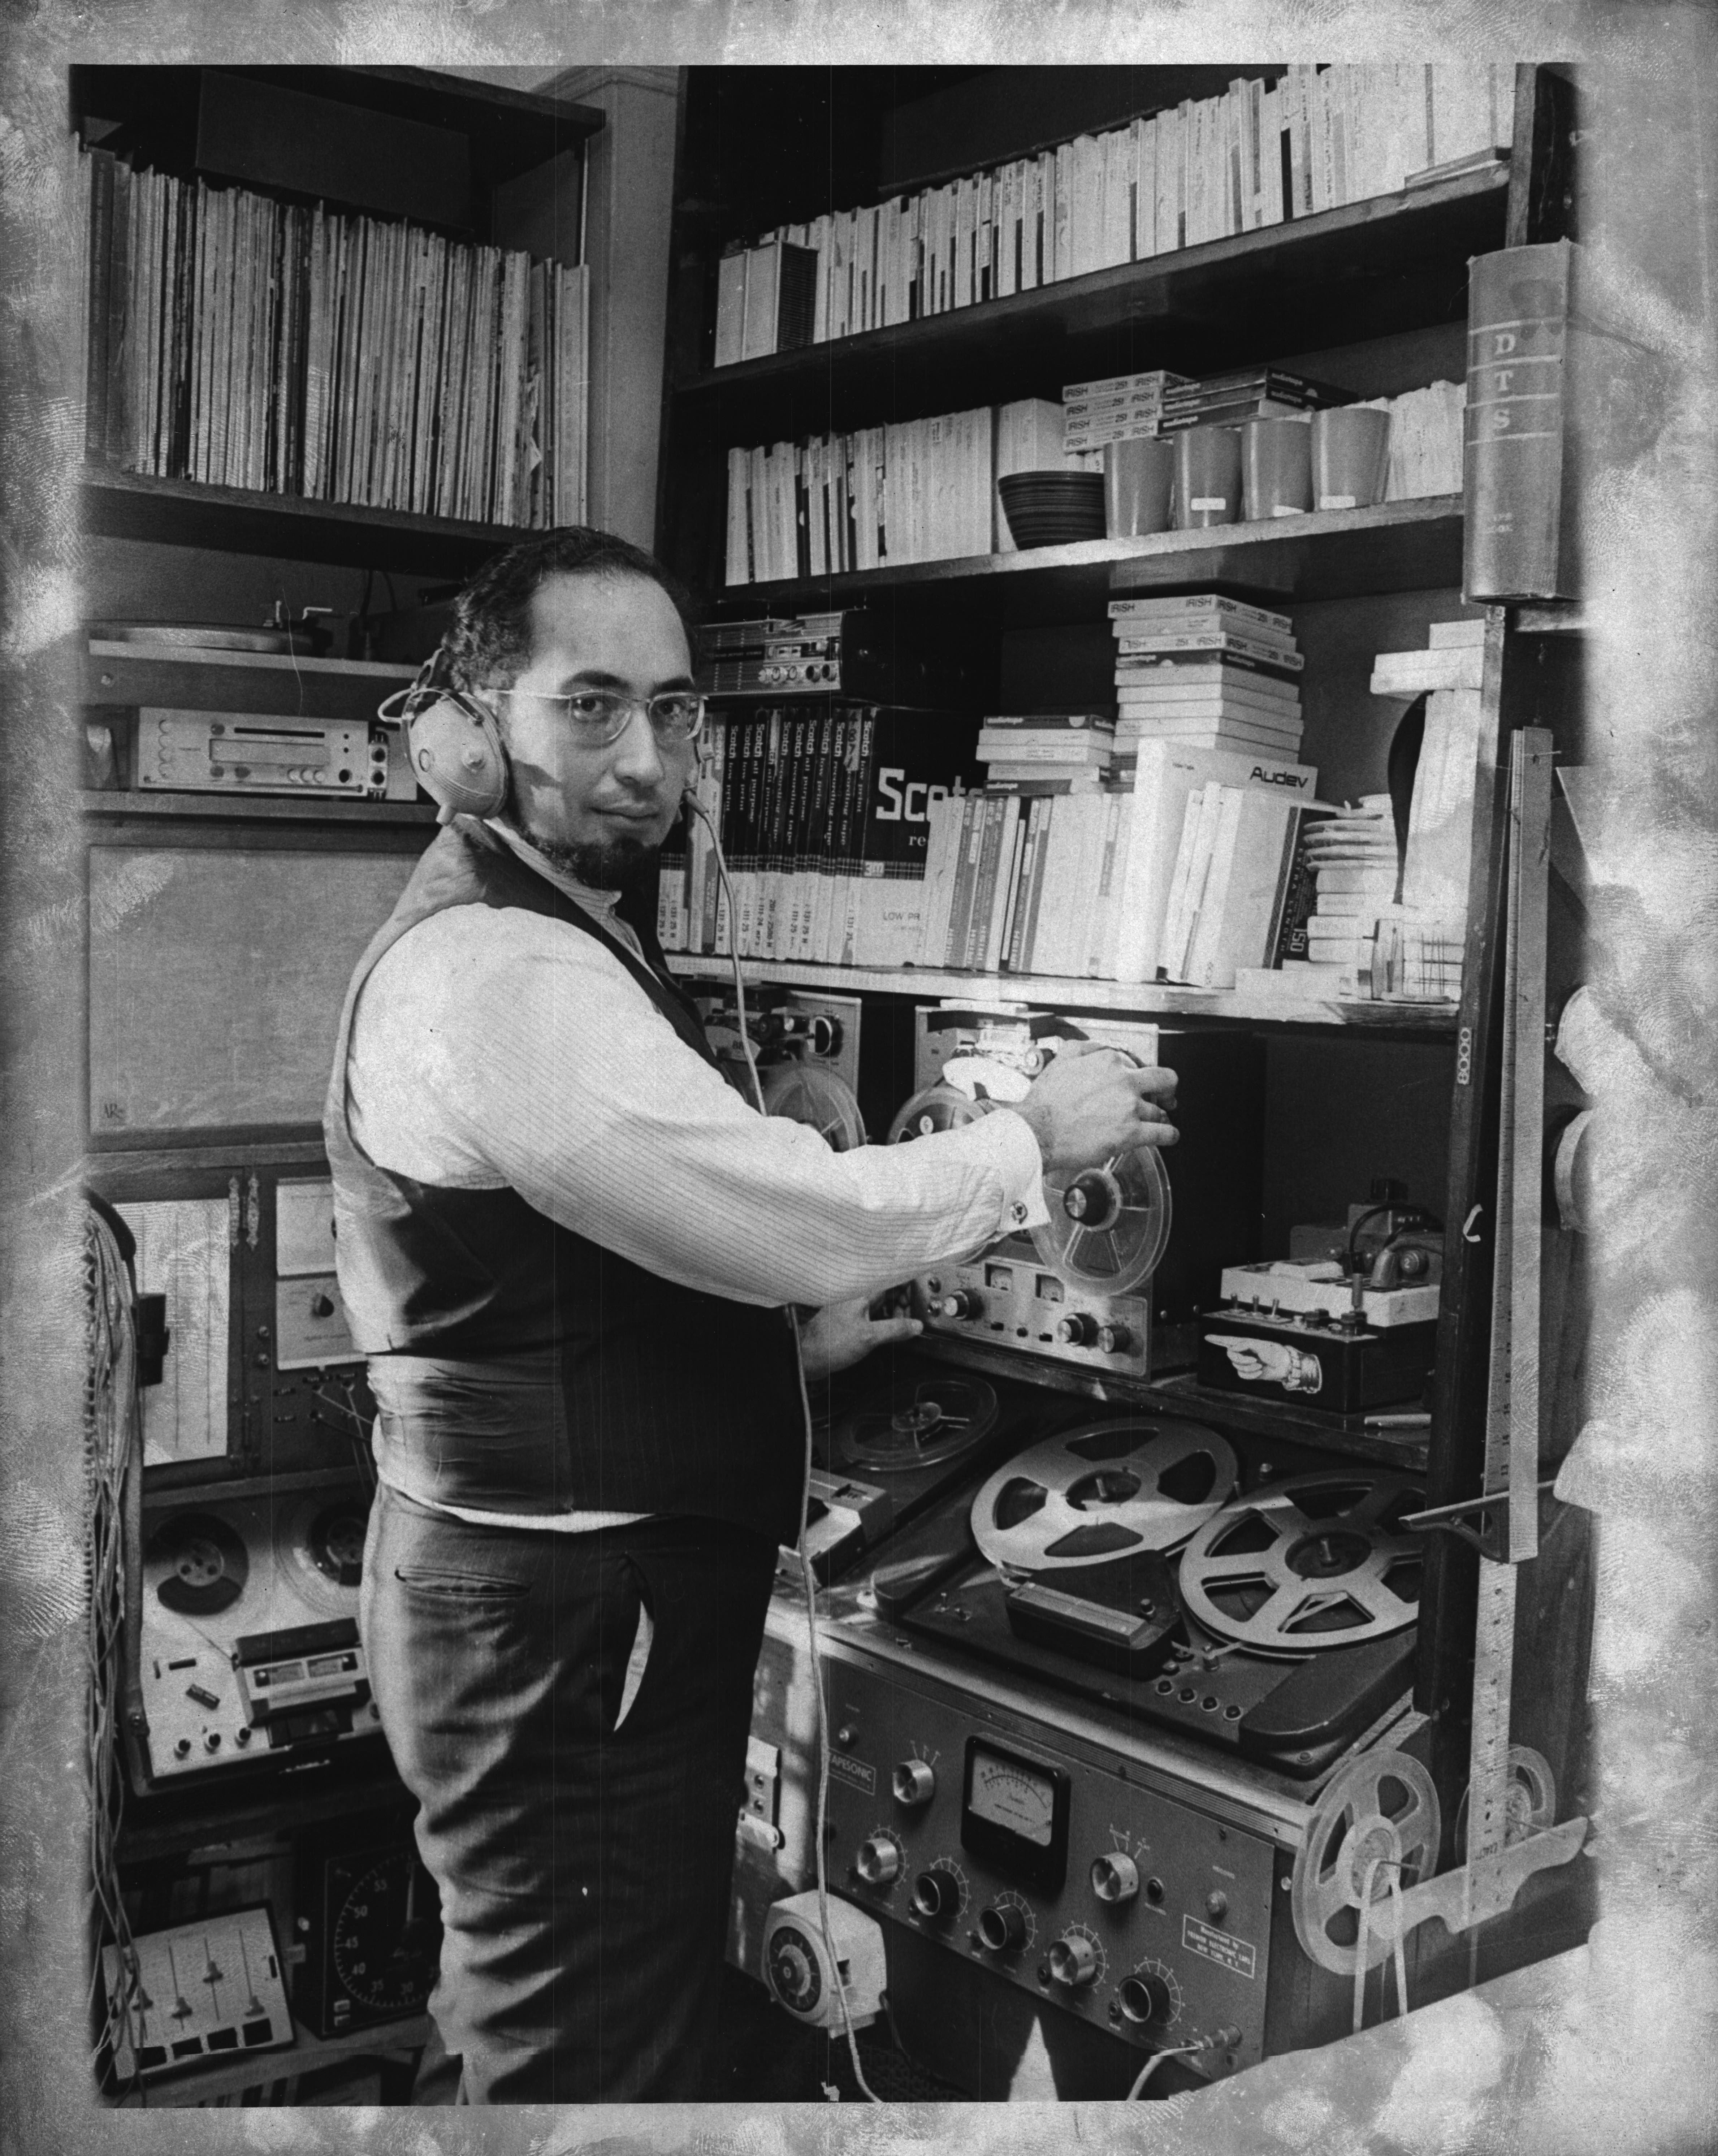 Teibel in his New York City studio, 1970